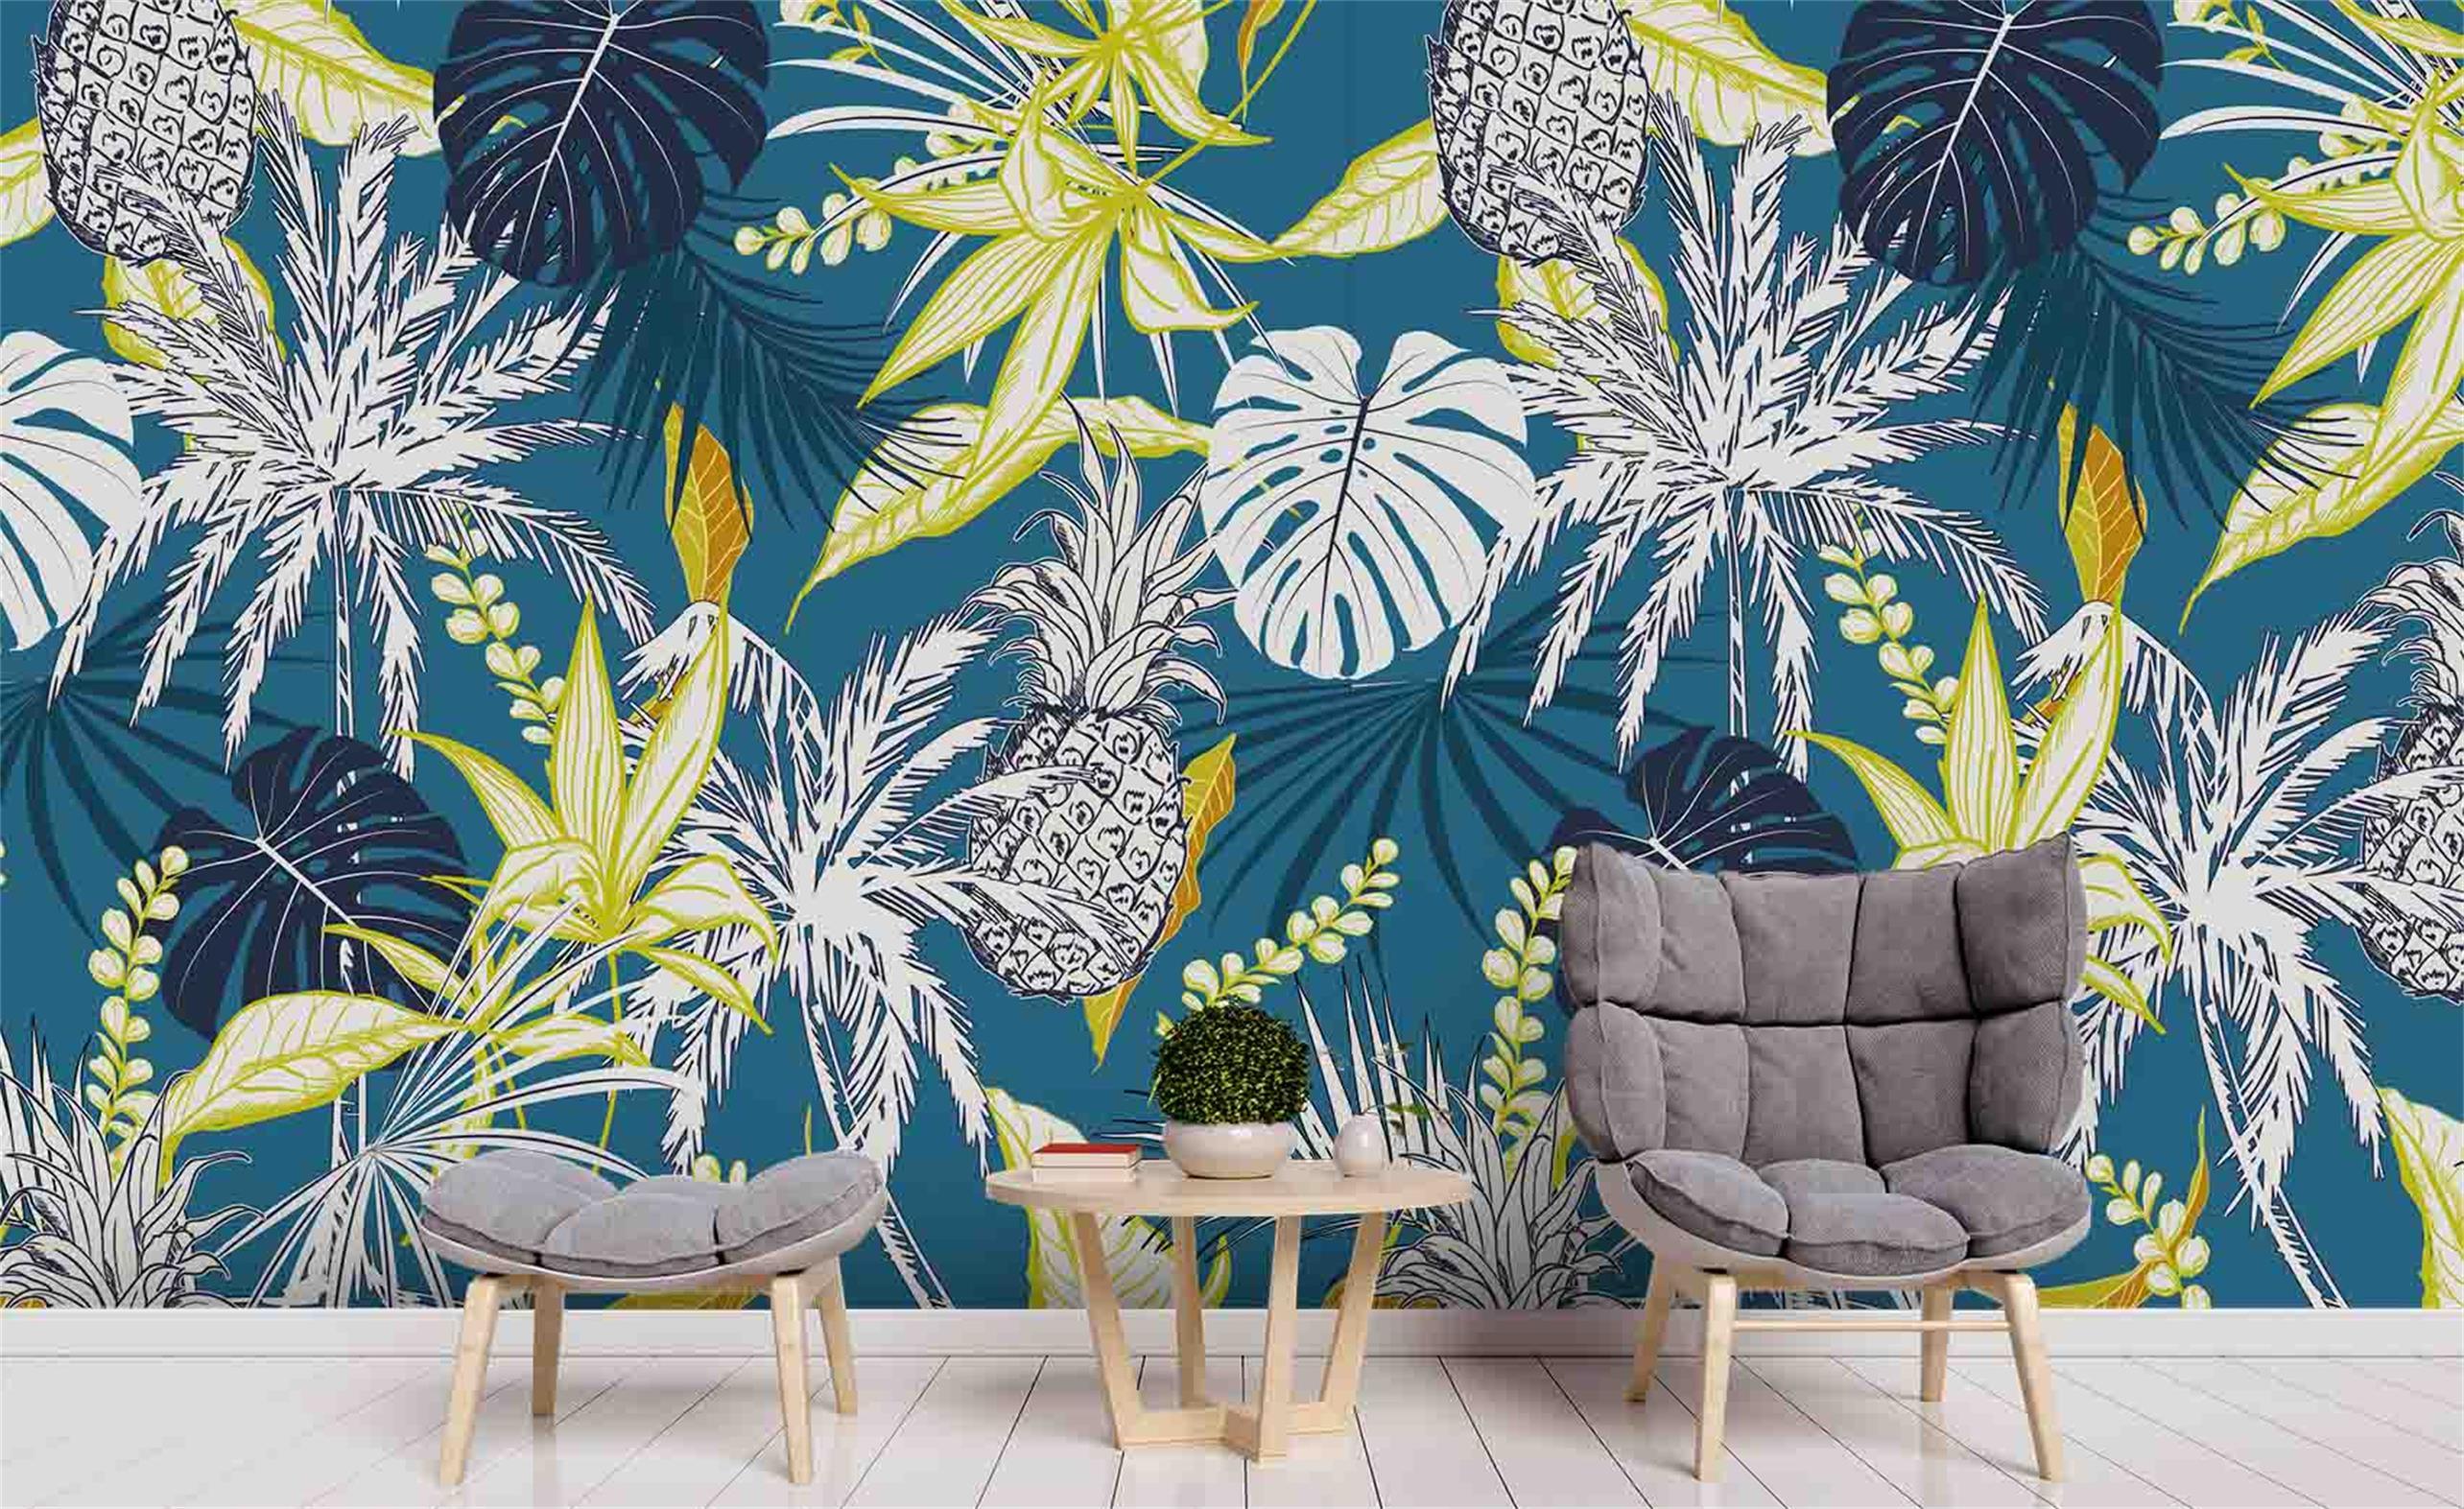 3D Blue Pineapple Palm Tree Leaves Wall Mural Wallpaper SF53- Jess Art Decoration